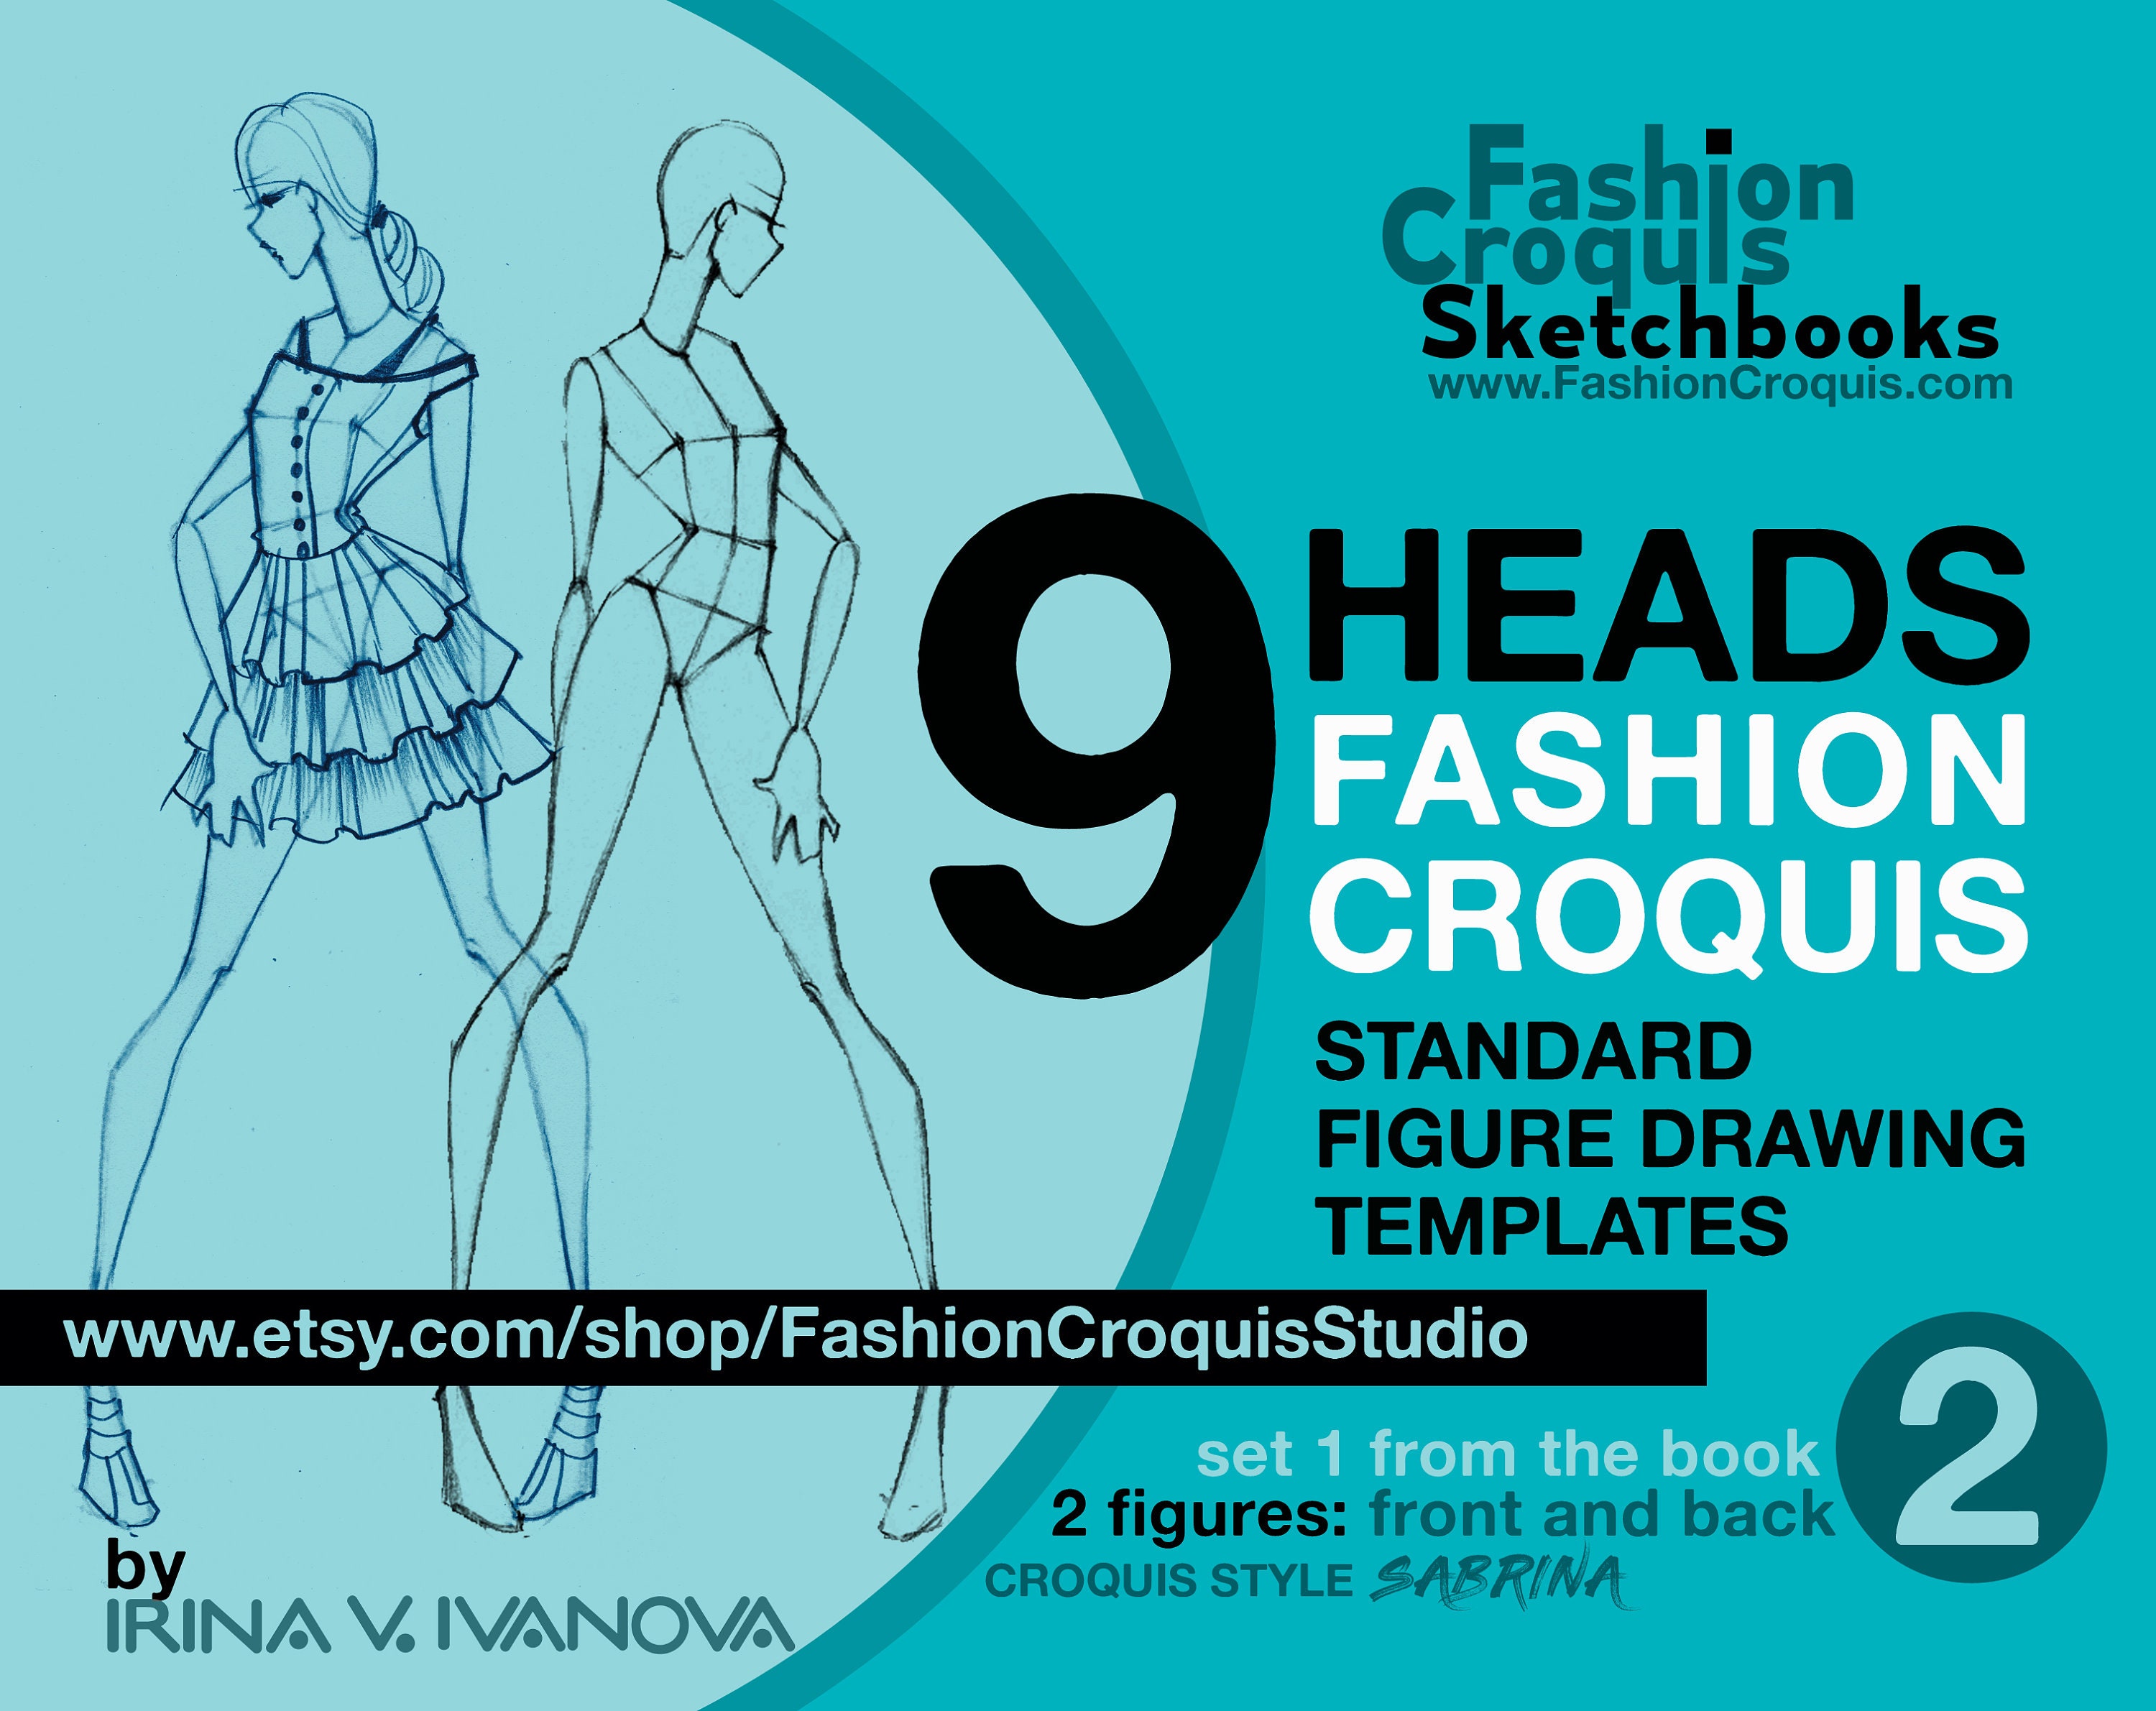 Project Runway Fashion Design Guide Figure Shoe Sketch book Drawing Set  Pencils